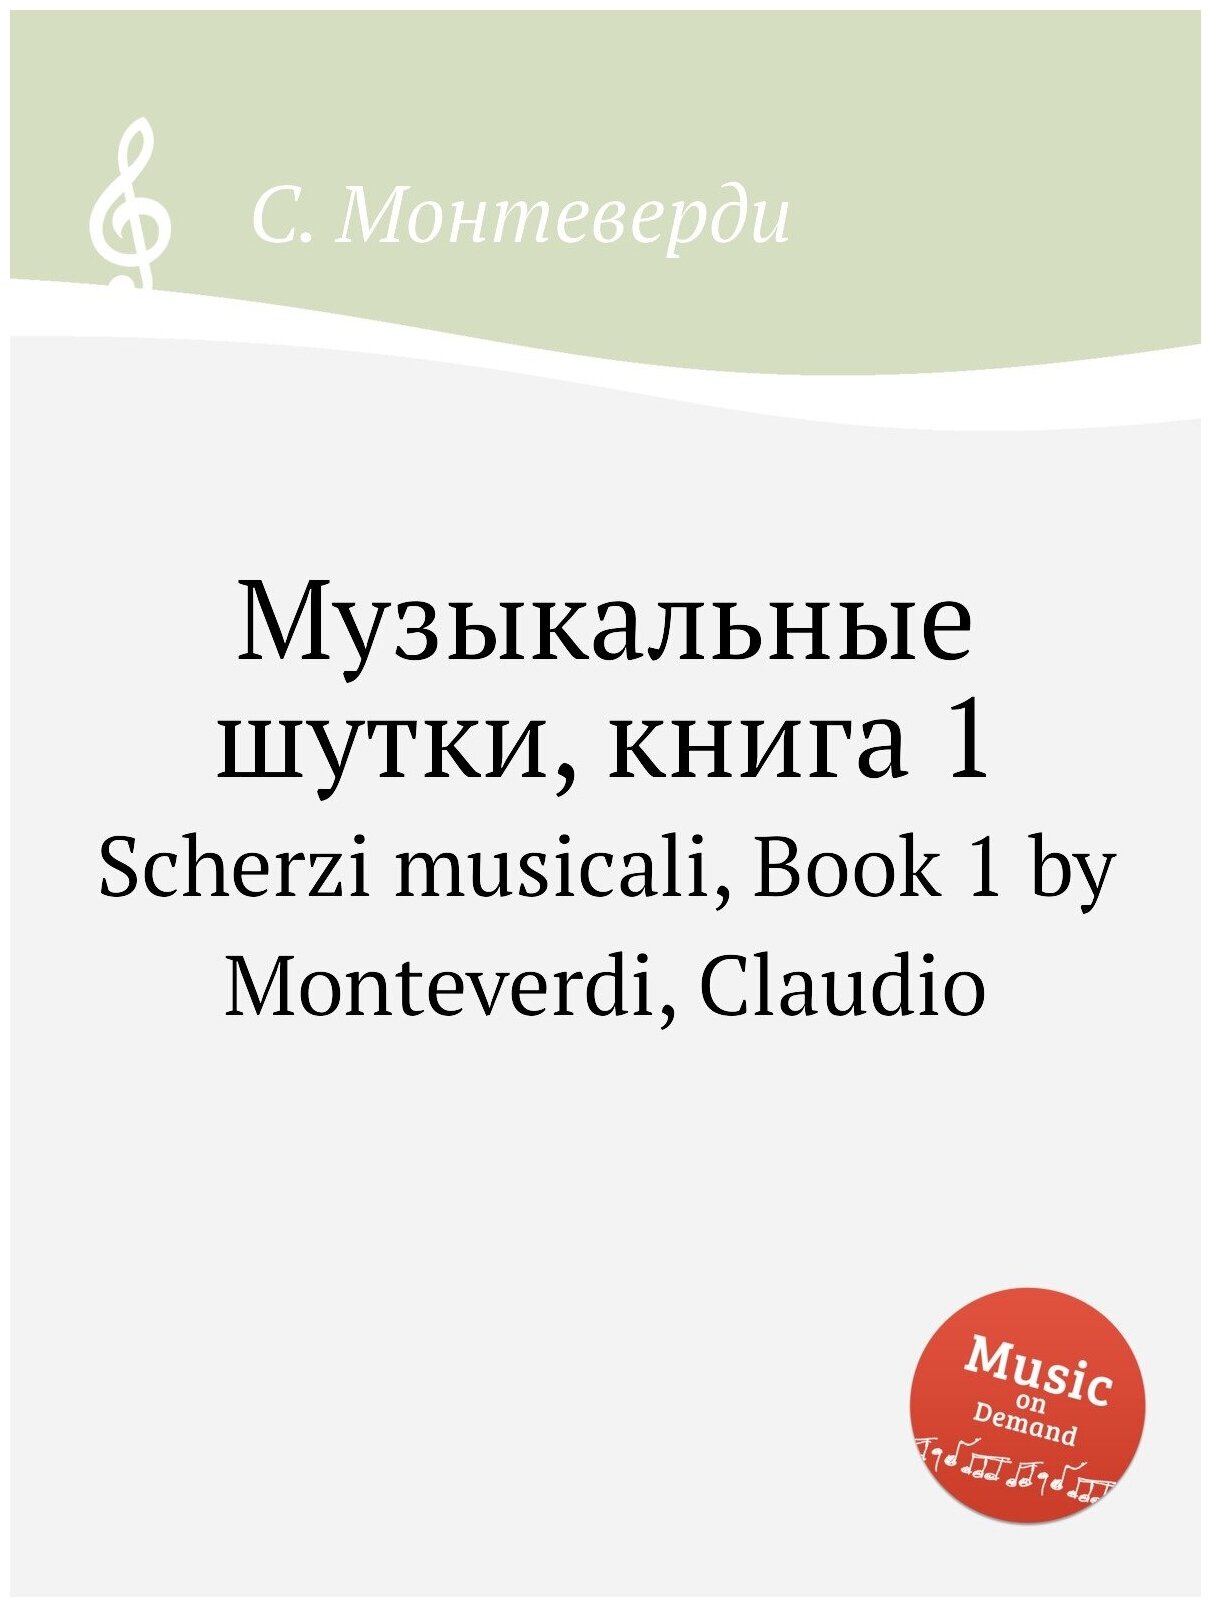 Музыкальные шутки, книга 1. Scherzi musicali, Book 1 by Monteverdi, Claudio